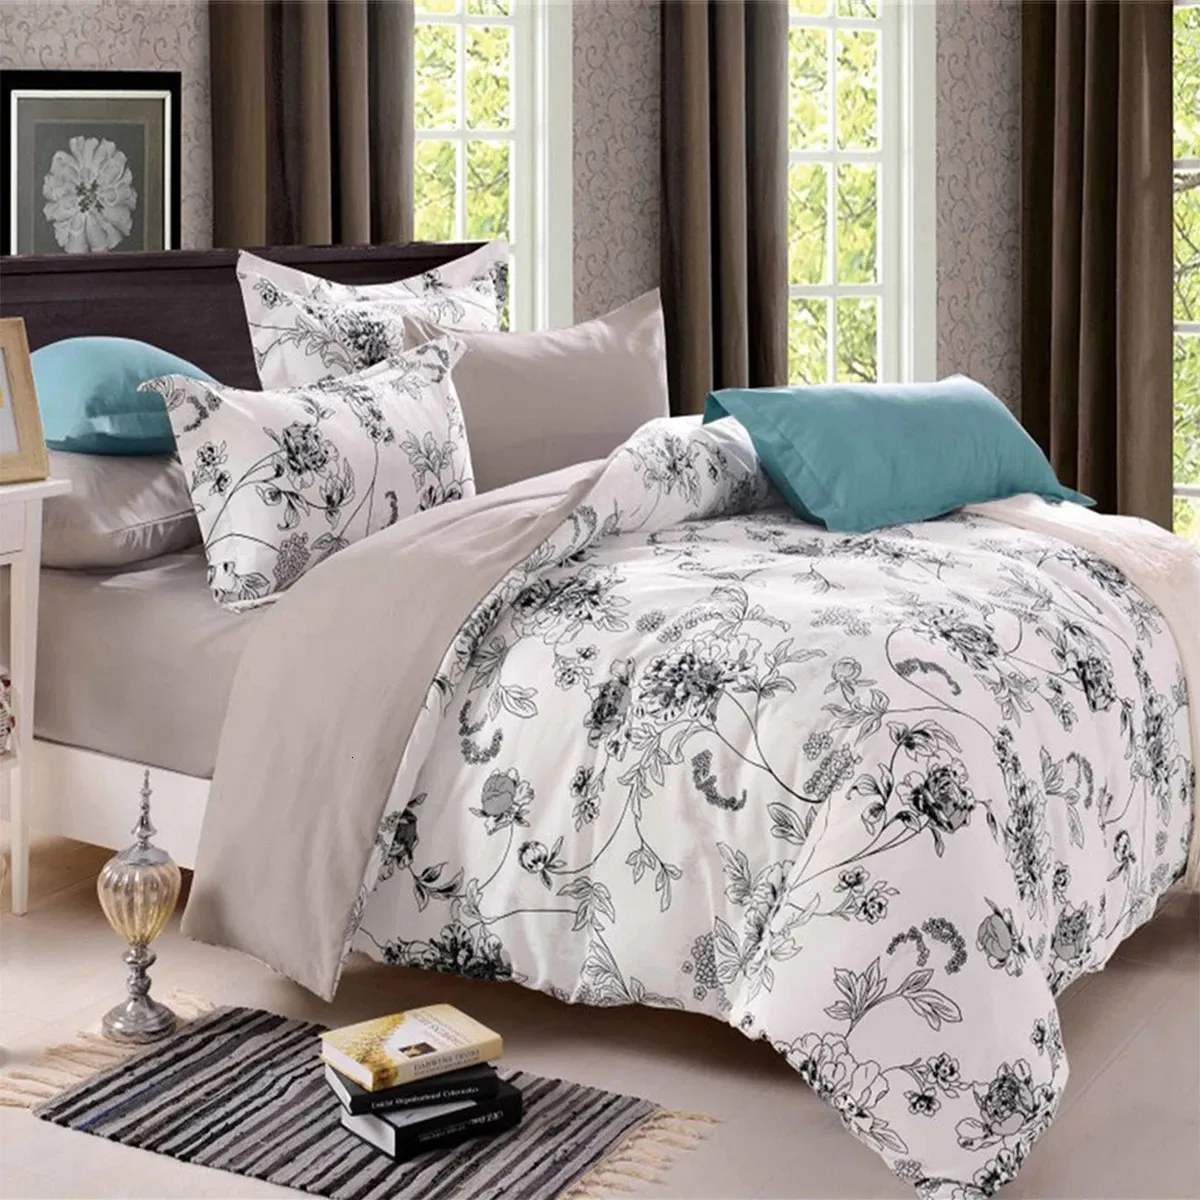 Bedding sets Modern Minimalist Style Set Bedclothes Include Duvet Cover Bed Sheet Pillowcase Comforter Sets Linen 231023